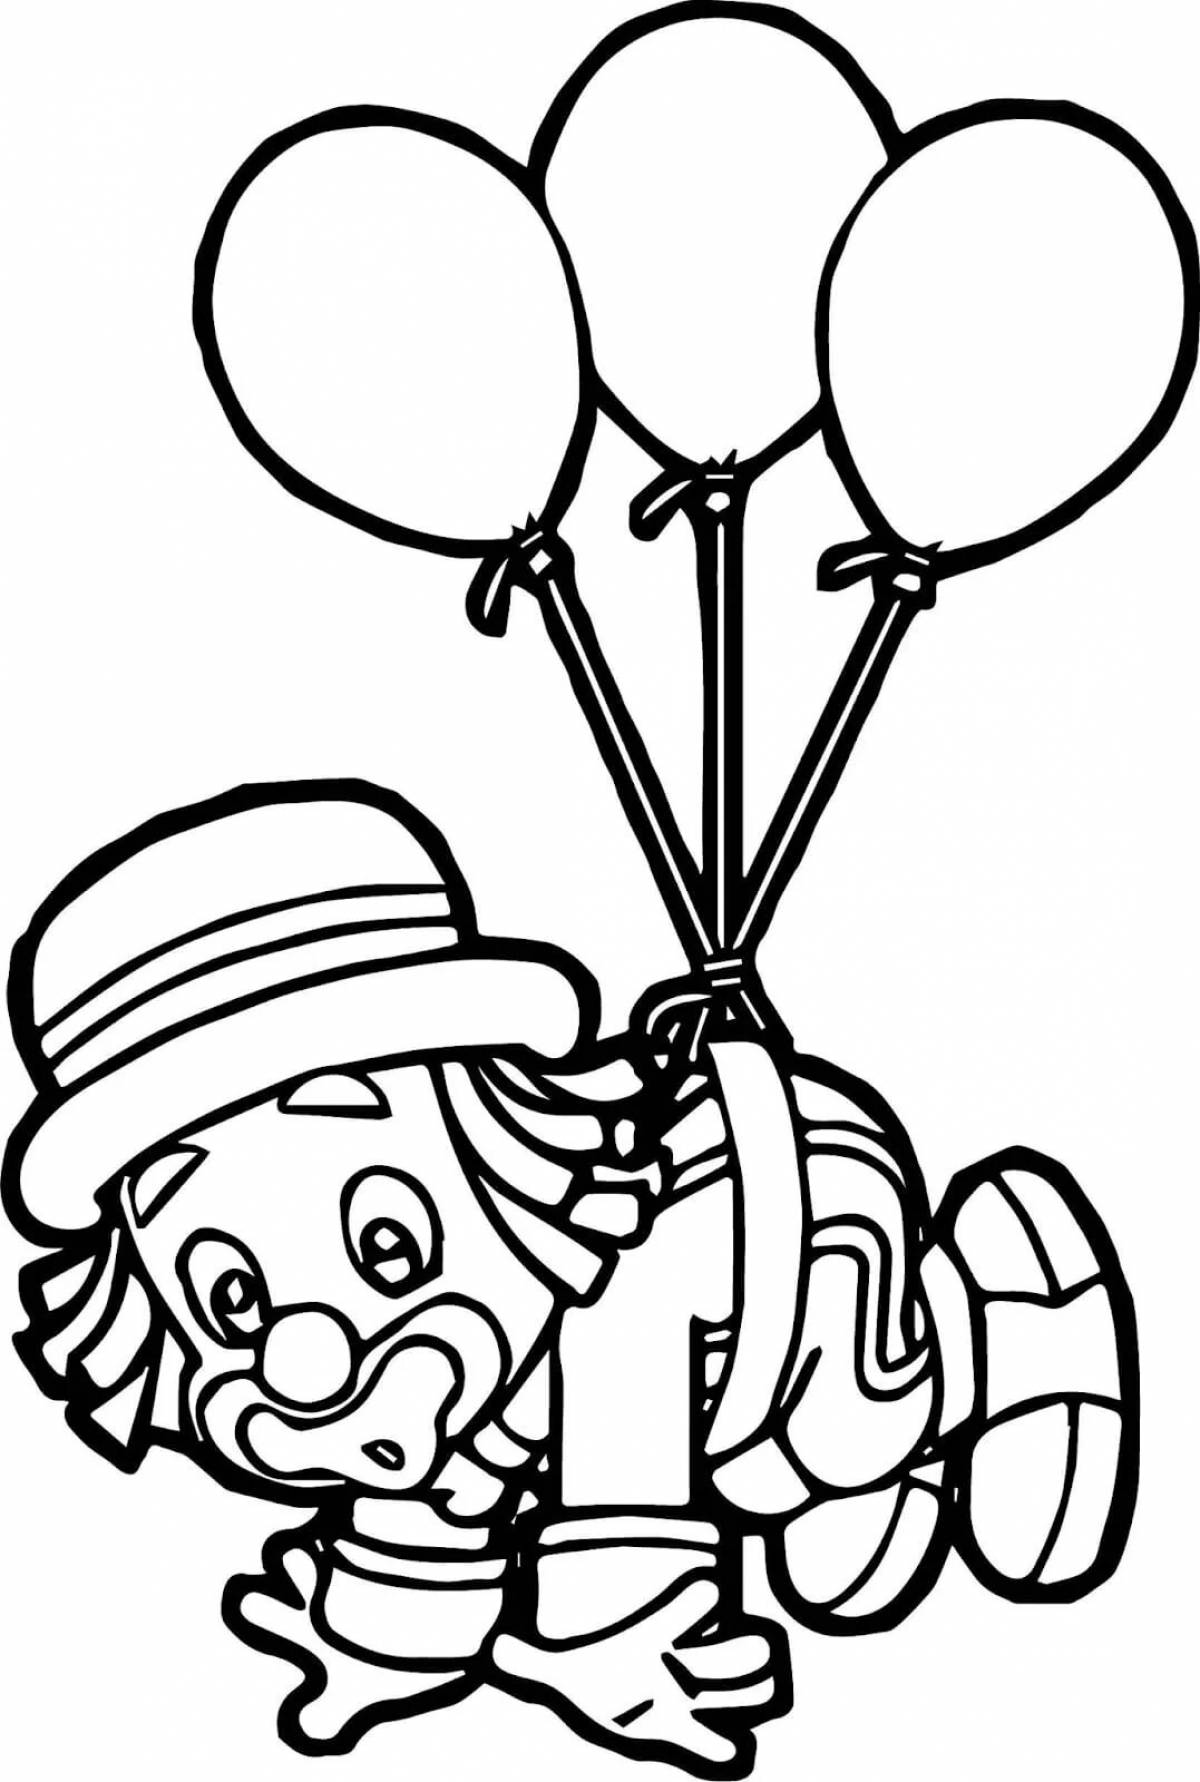 Balloon clown #3